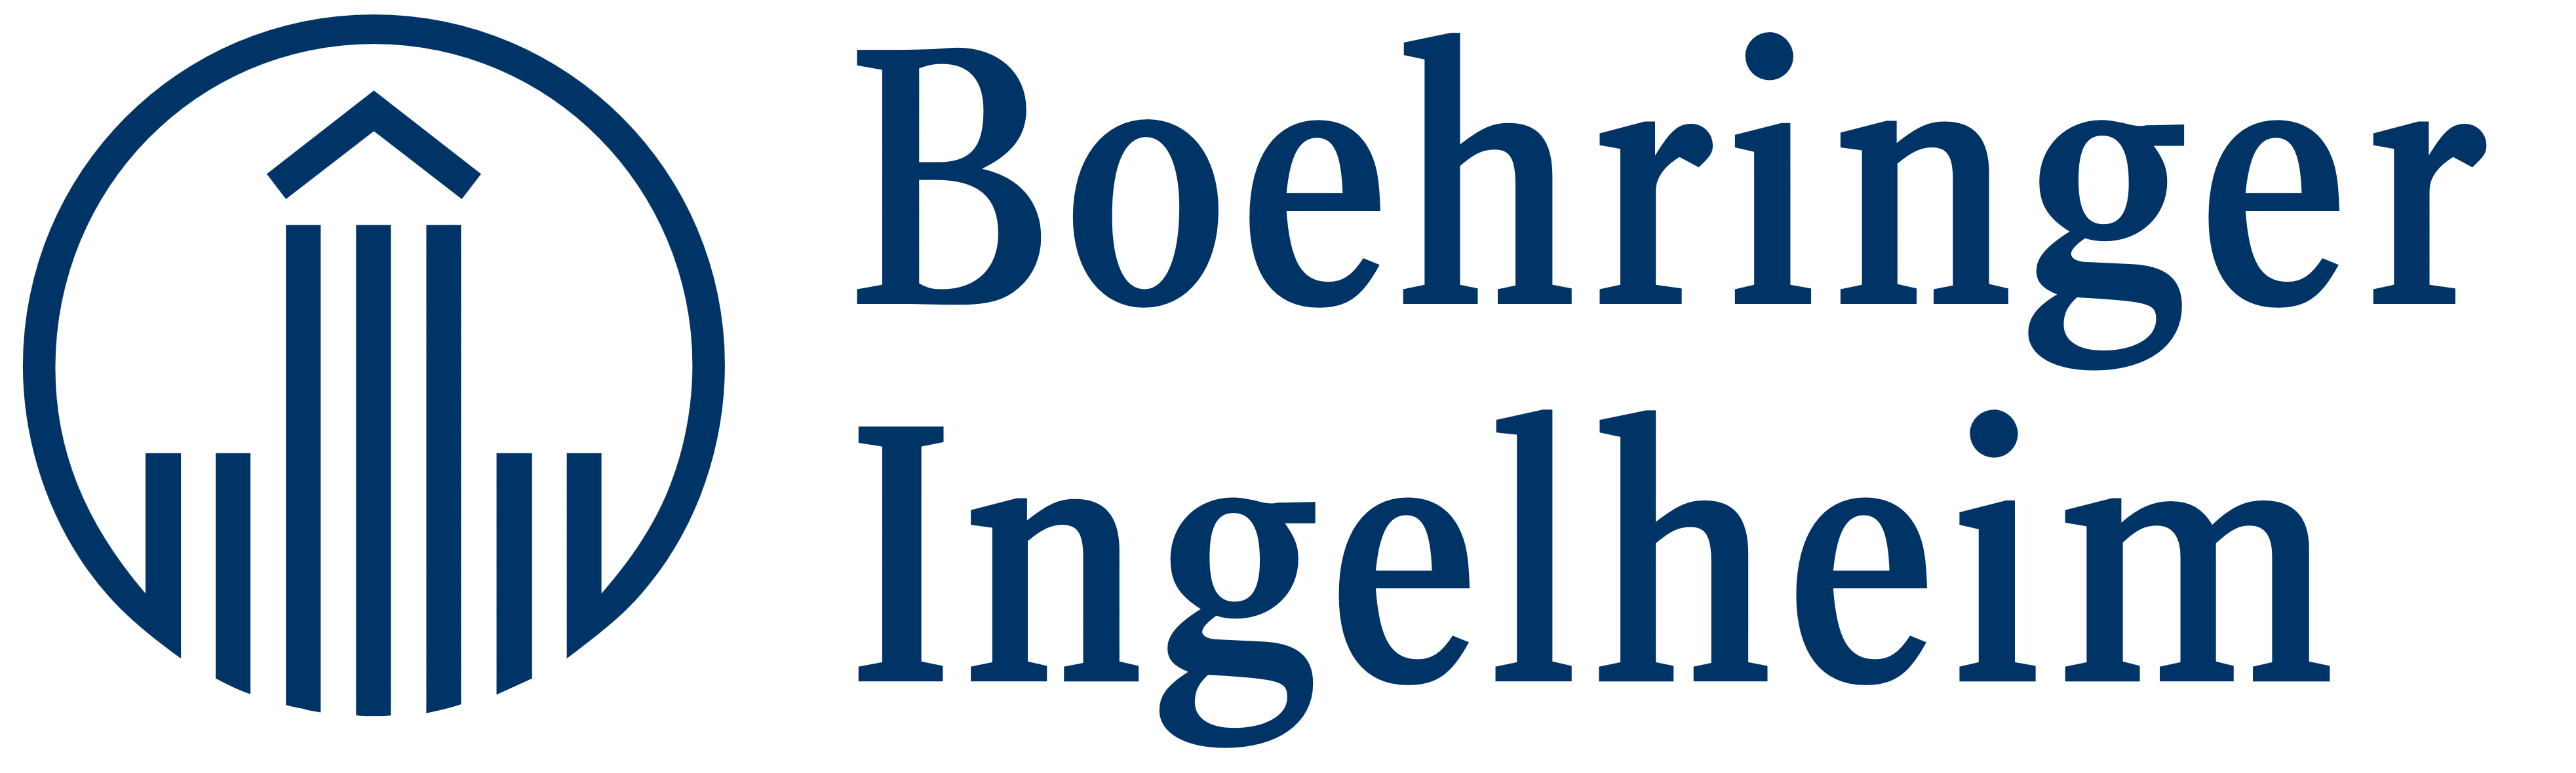 Boehringer Ingelheim logo, logotype